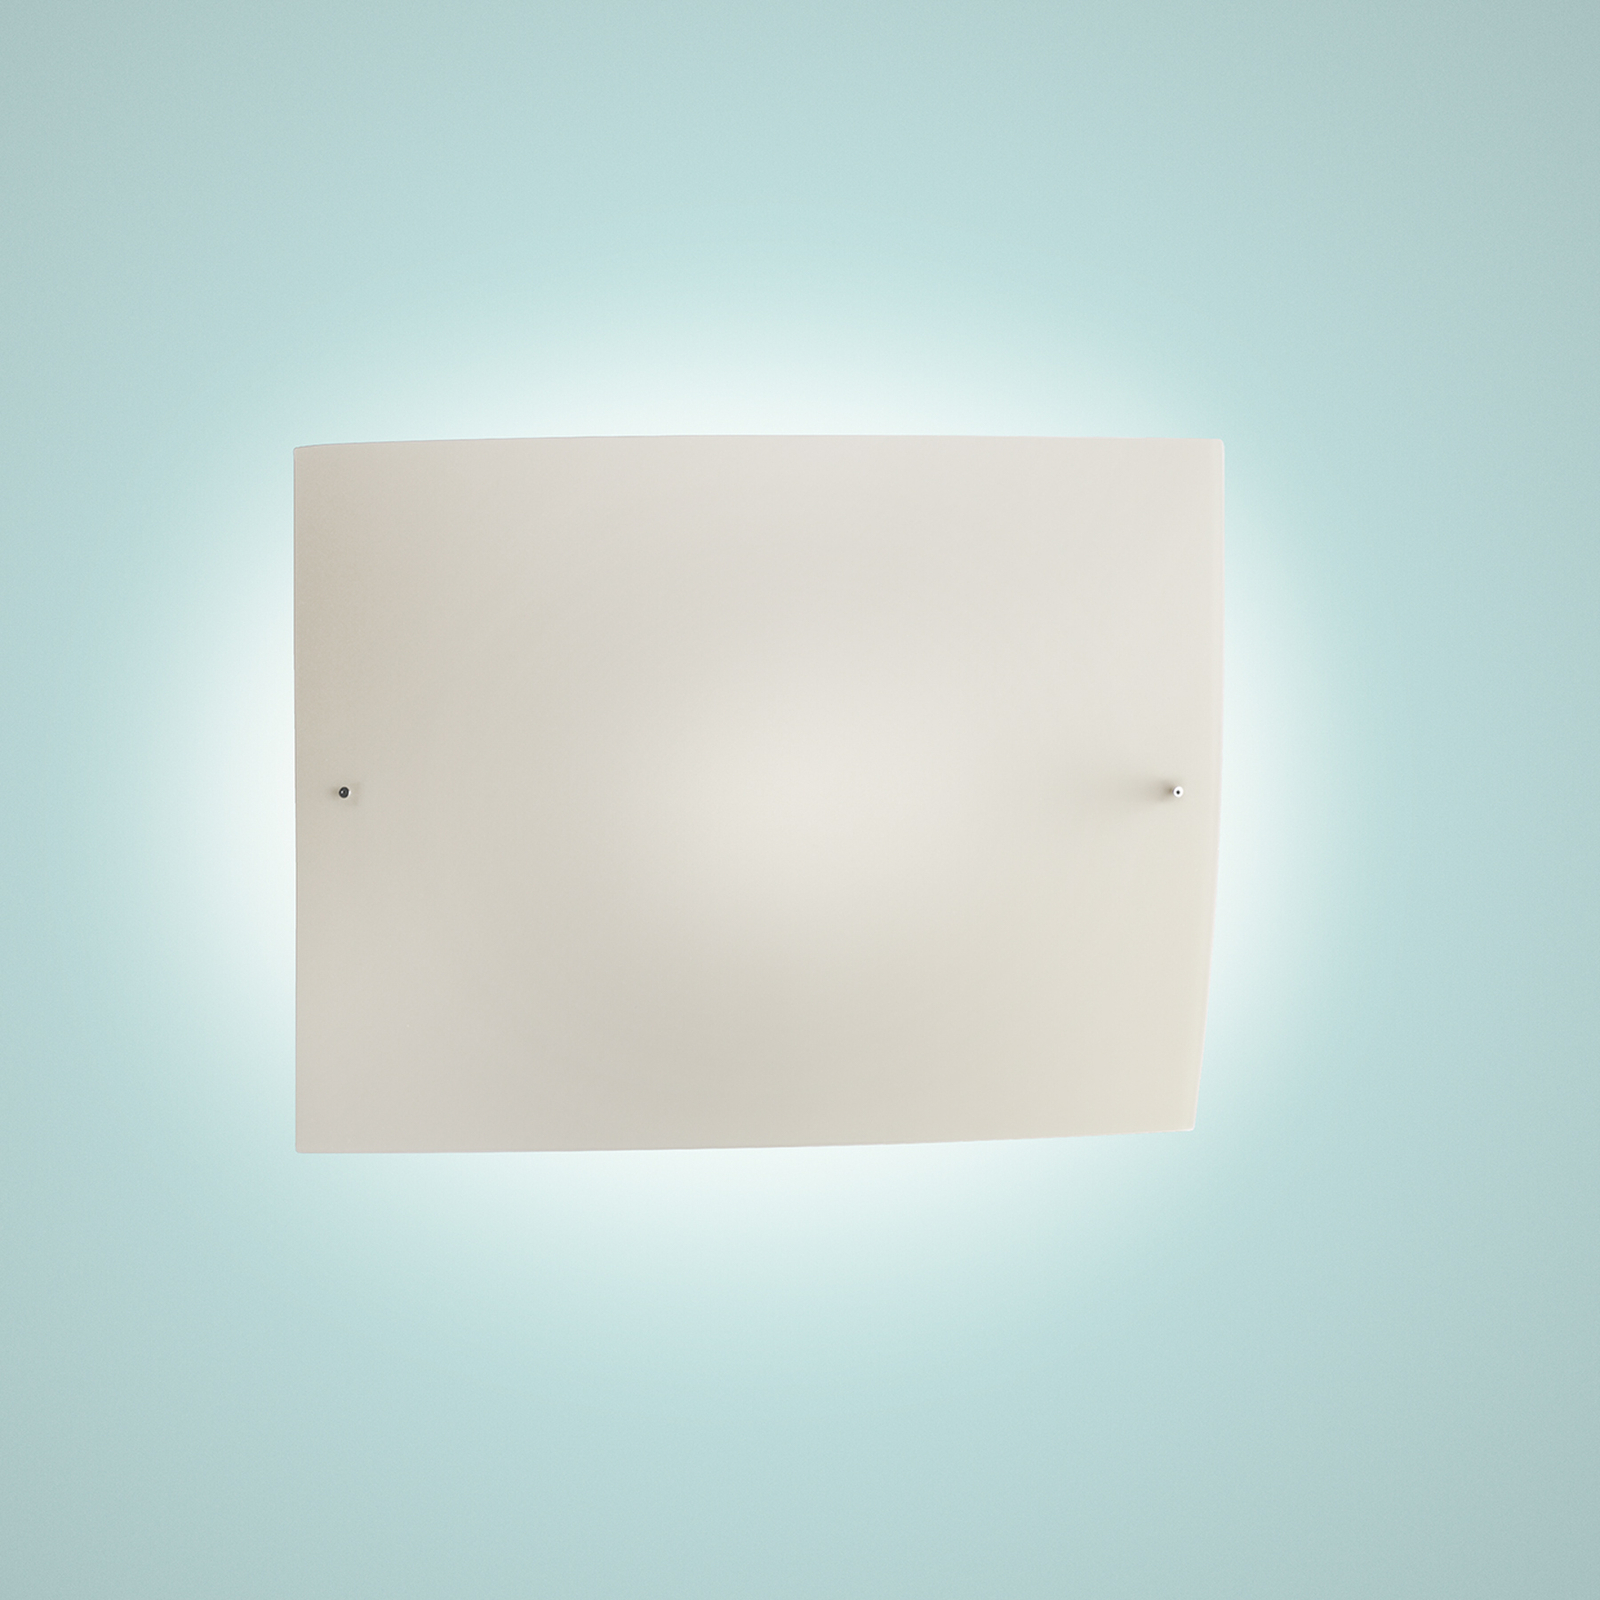 Foscarini Folio piccola wall light, white